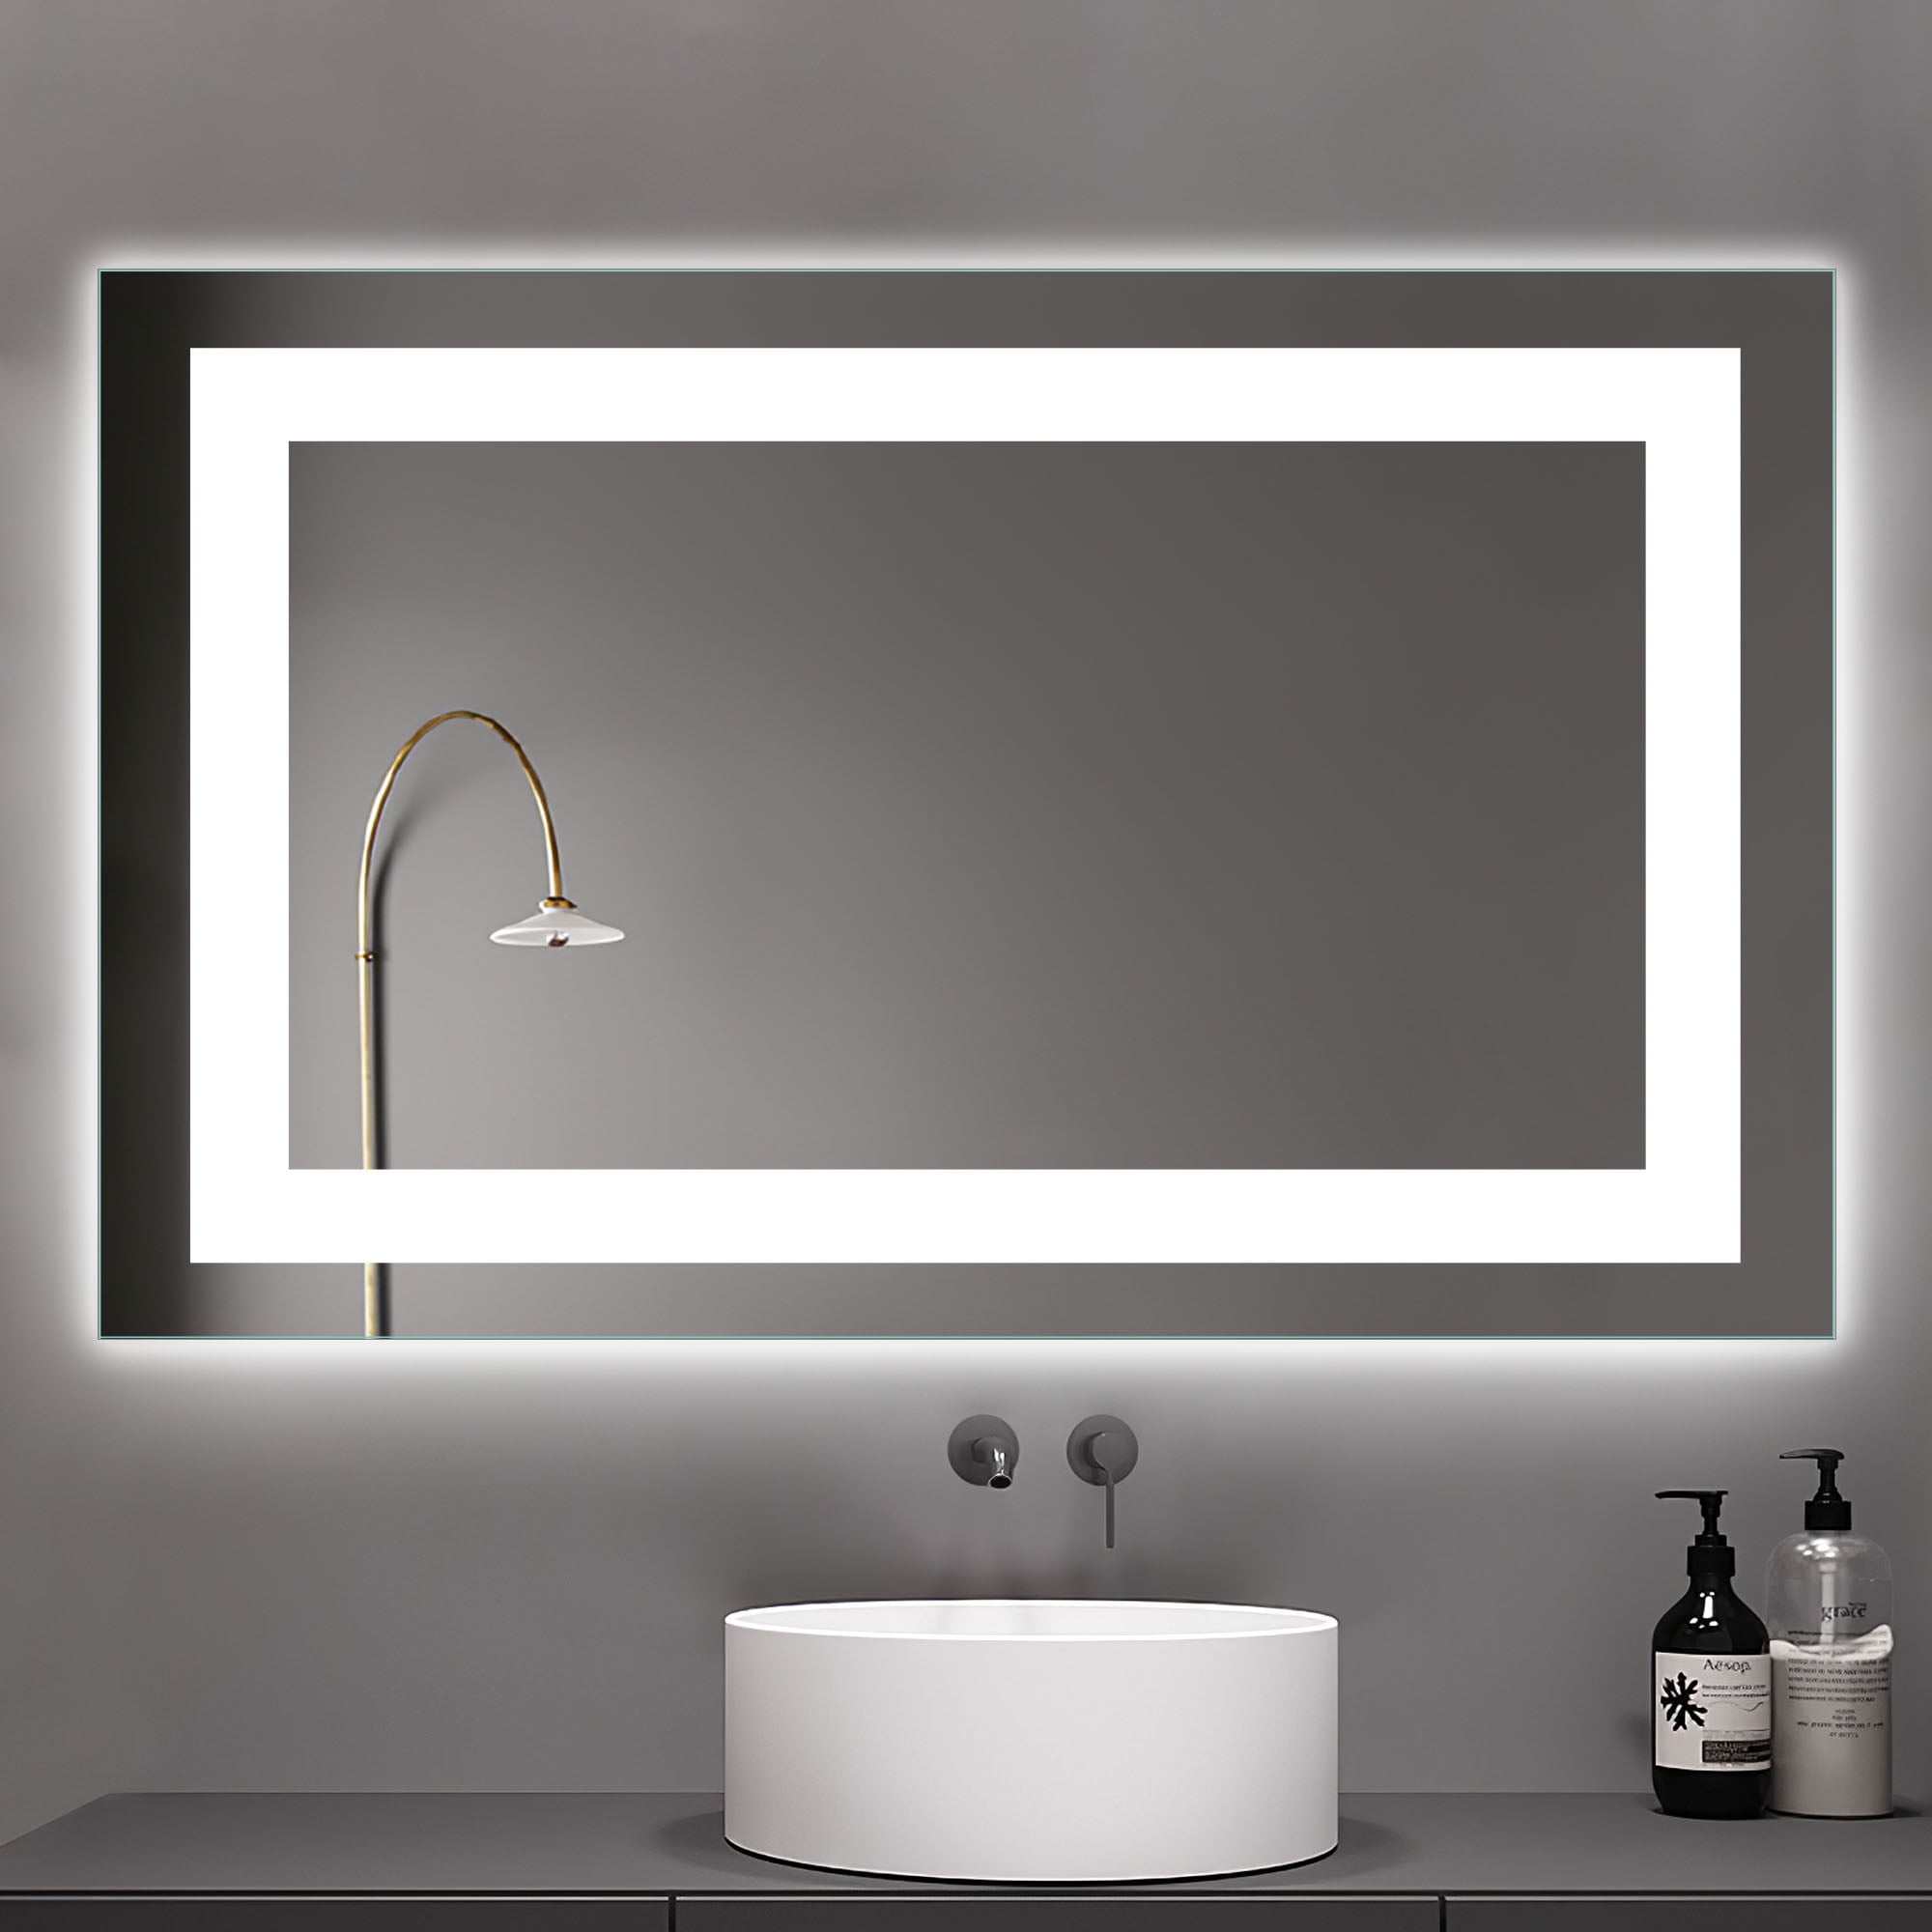 Details about   Large LED Touch Lighted Bathroom Vanity Mirror Demist Antifog for Shaving Makeup 